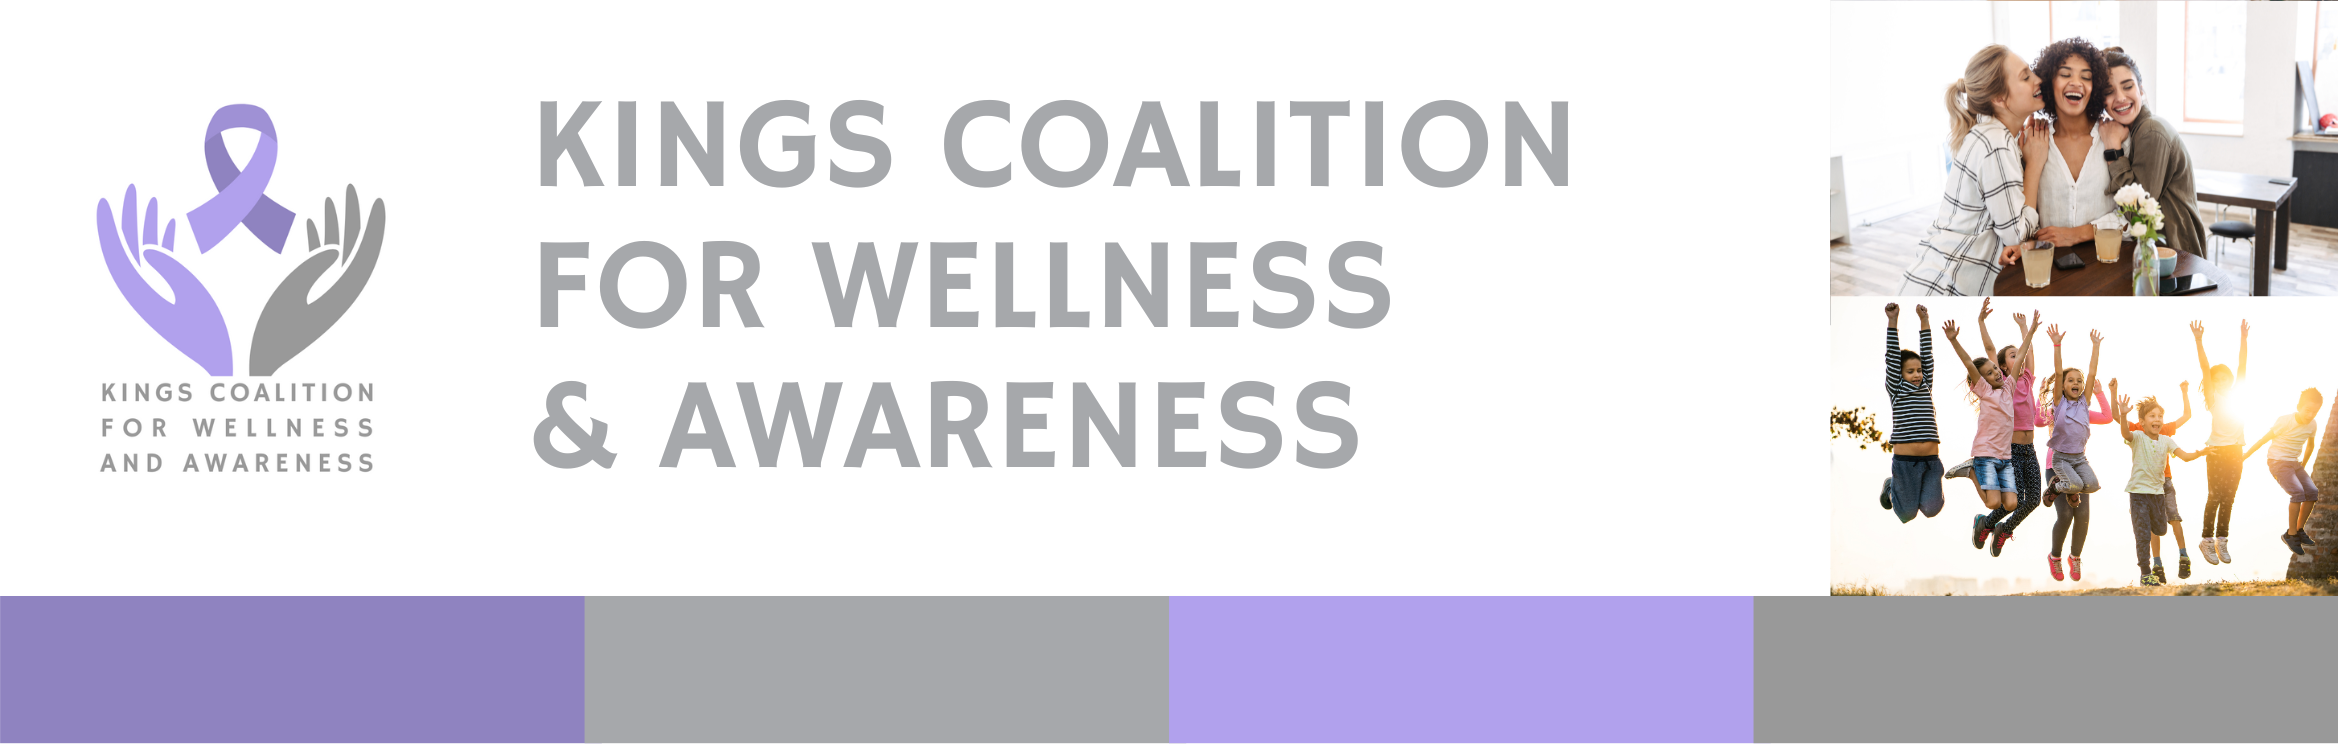 Kings Coalition for Wellness & Awareness